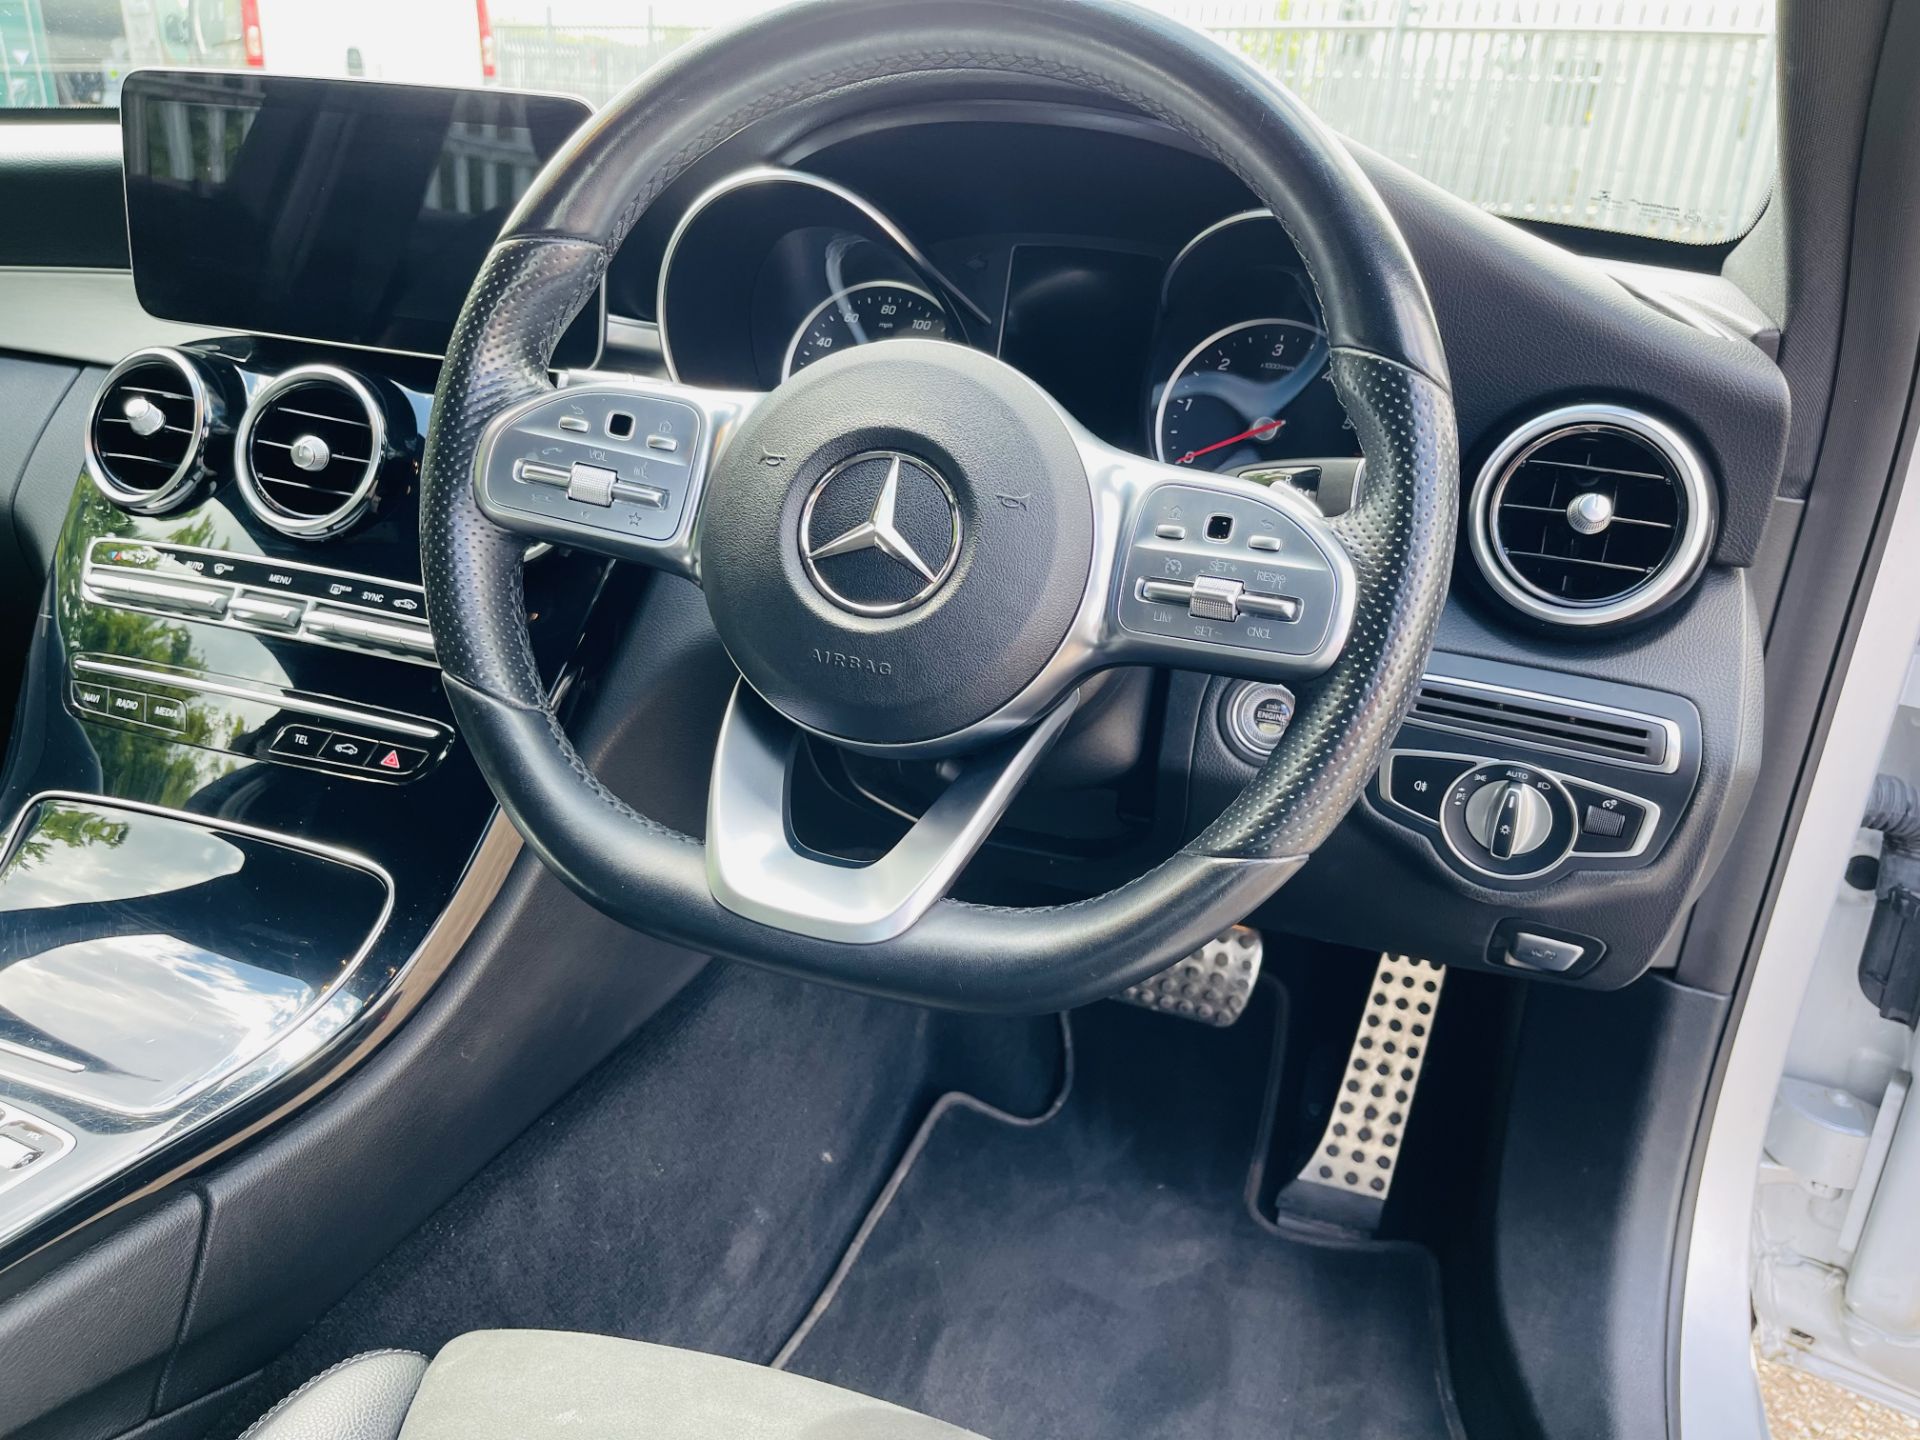 Mercedes Benz C220 AMG Line 9G-Tronic Auto 2019 ‘69 Reg’ - Sat Nav - A/C - Euro 6- ULEZ Compliant - Image 20 of 39